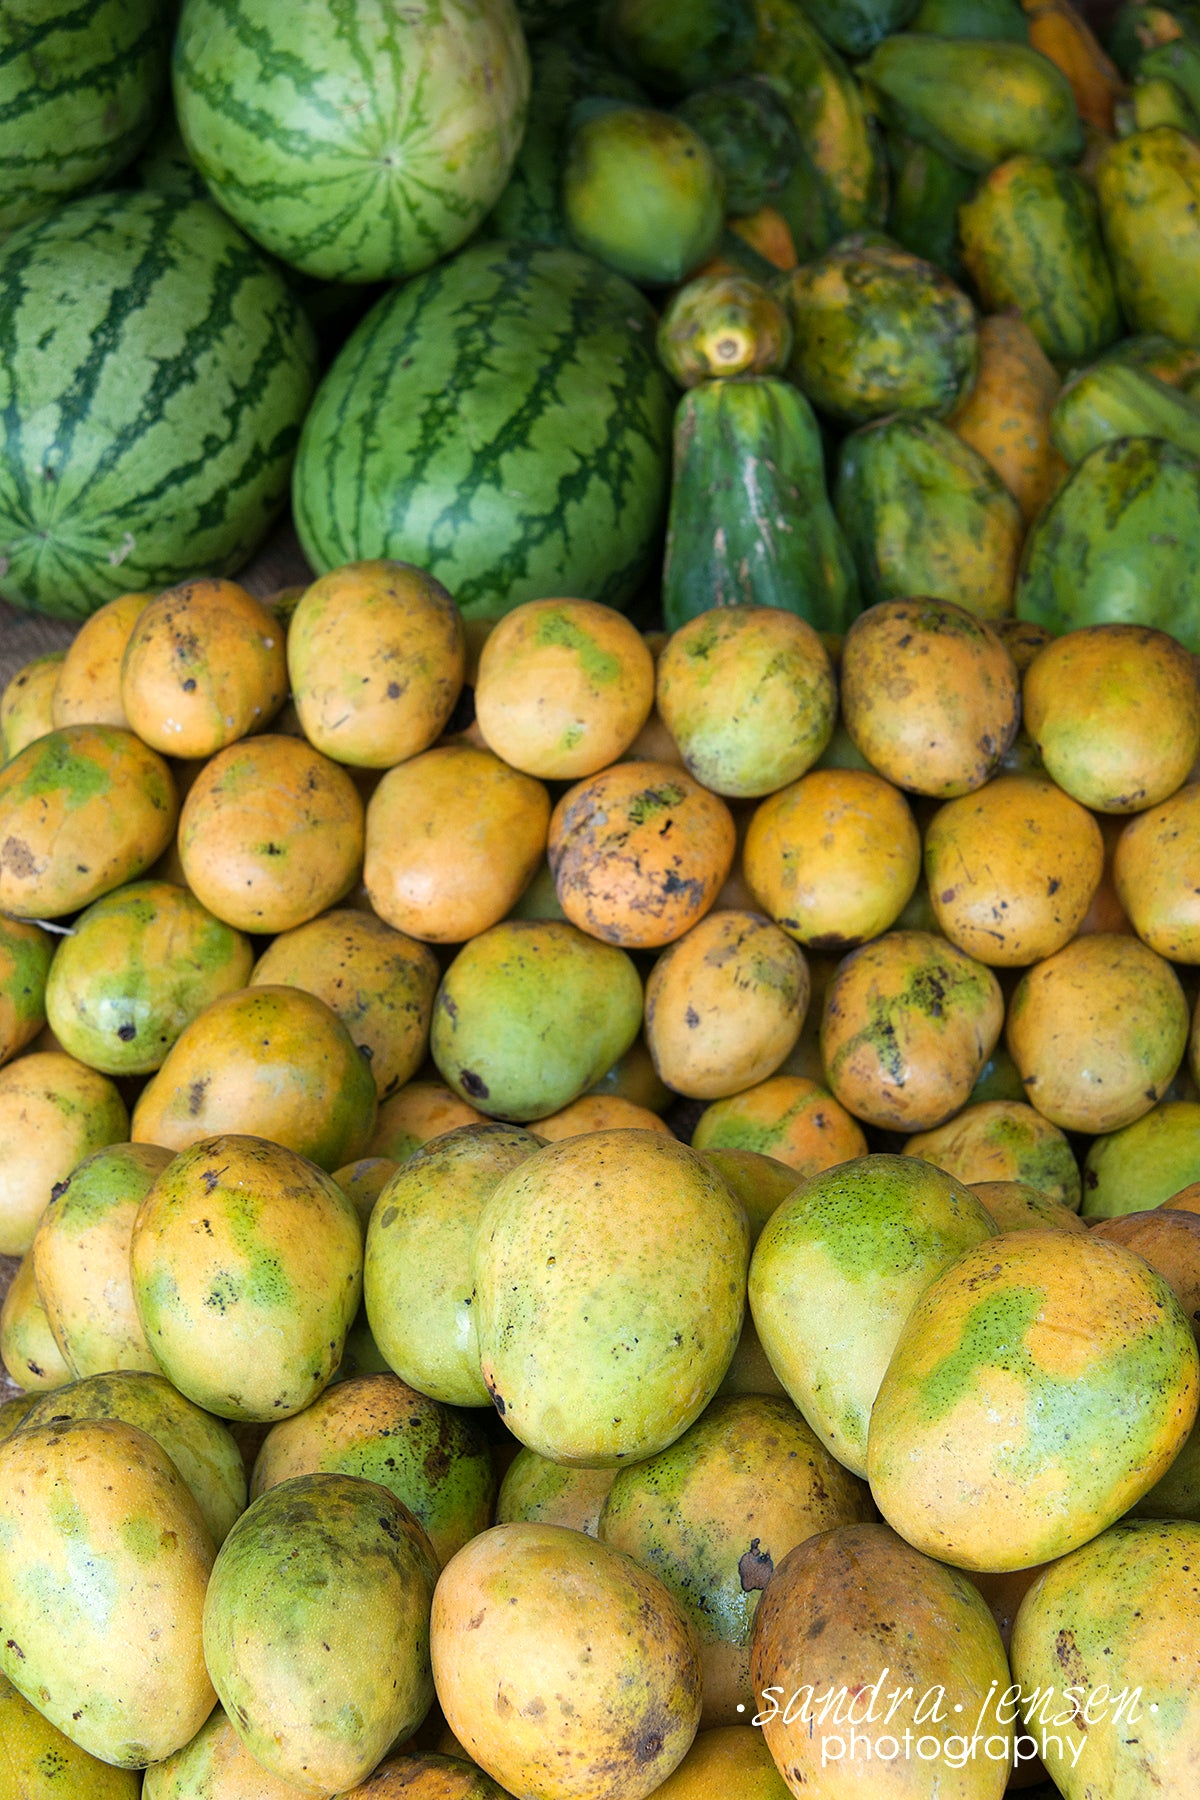 Print - Zanzibar, Tanzania - Fruit in Market Stall in Stonetown